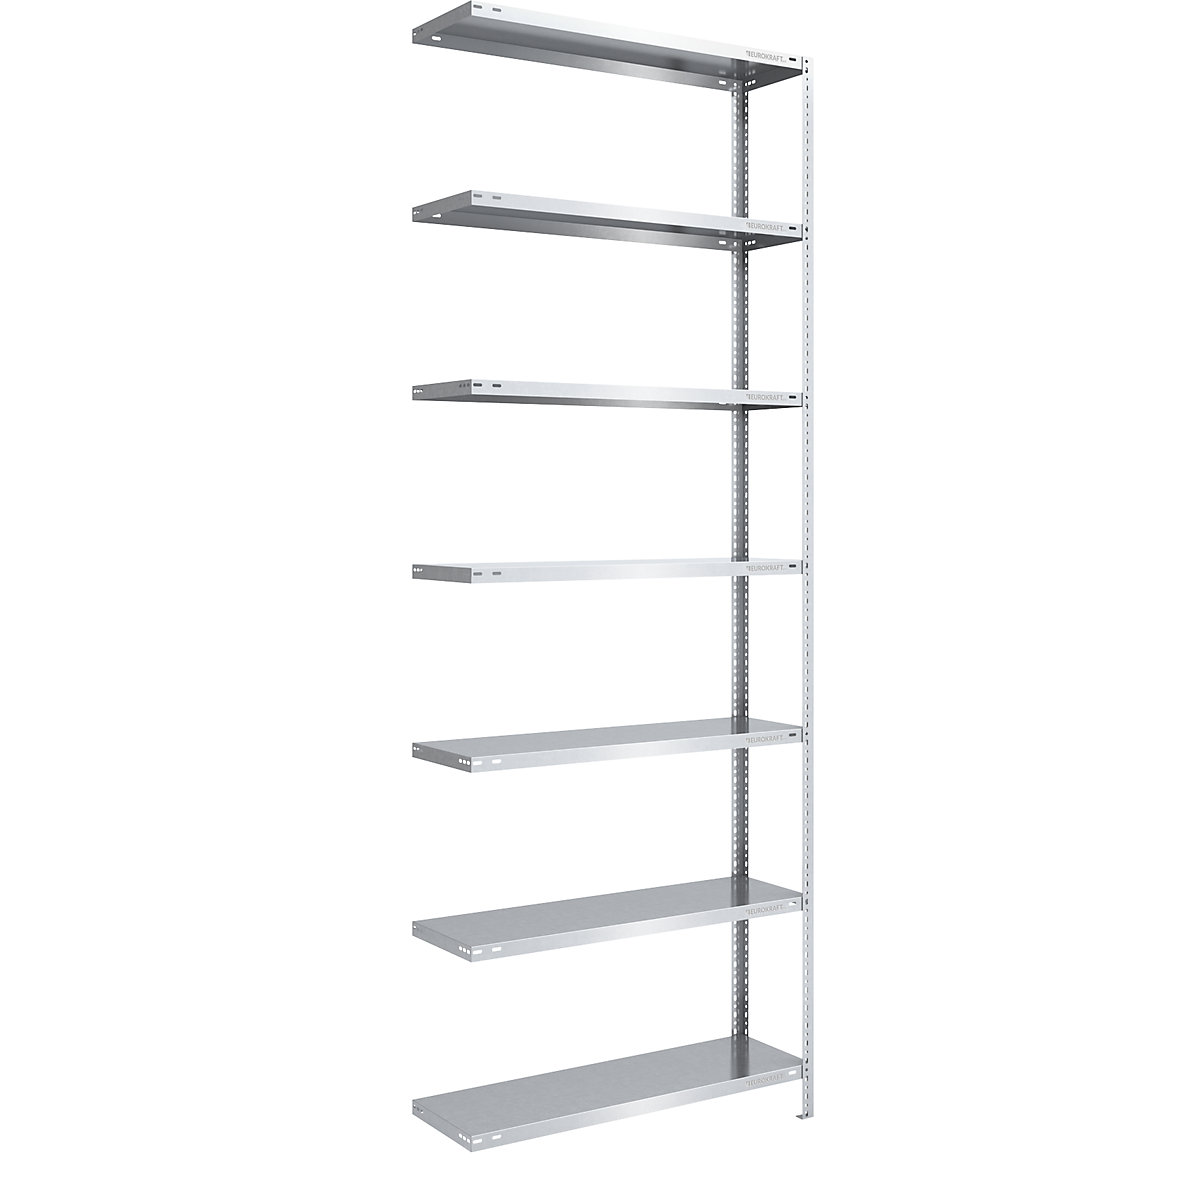 Bolt-together storage shelving, zinc plated, medium duty – eurokraft pro, shelf unit height 3000 mm, shelf width 1000 mm, depth 400 mm, extension shelf unit-11